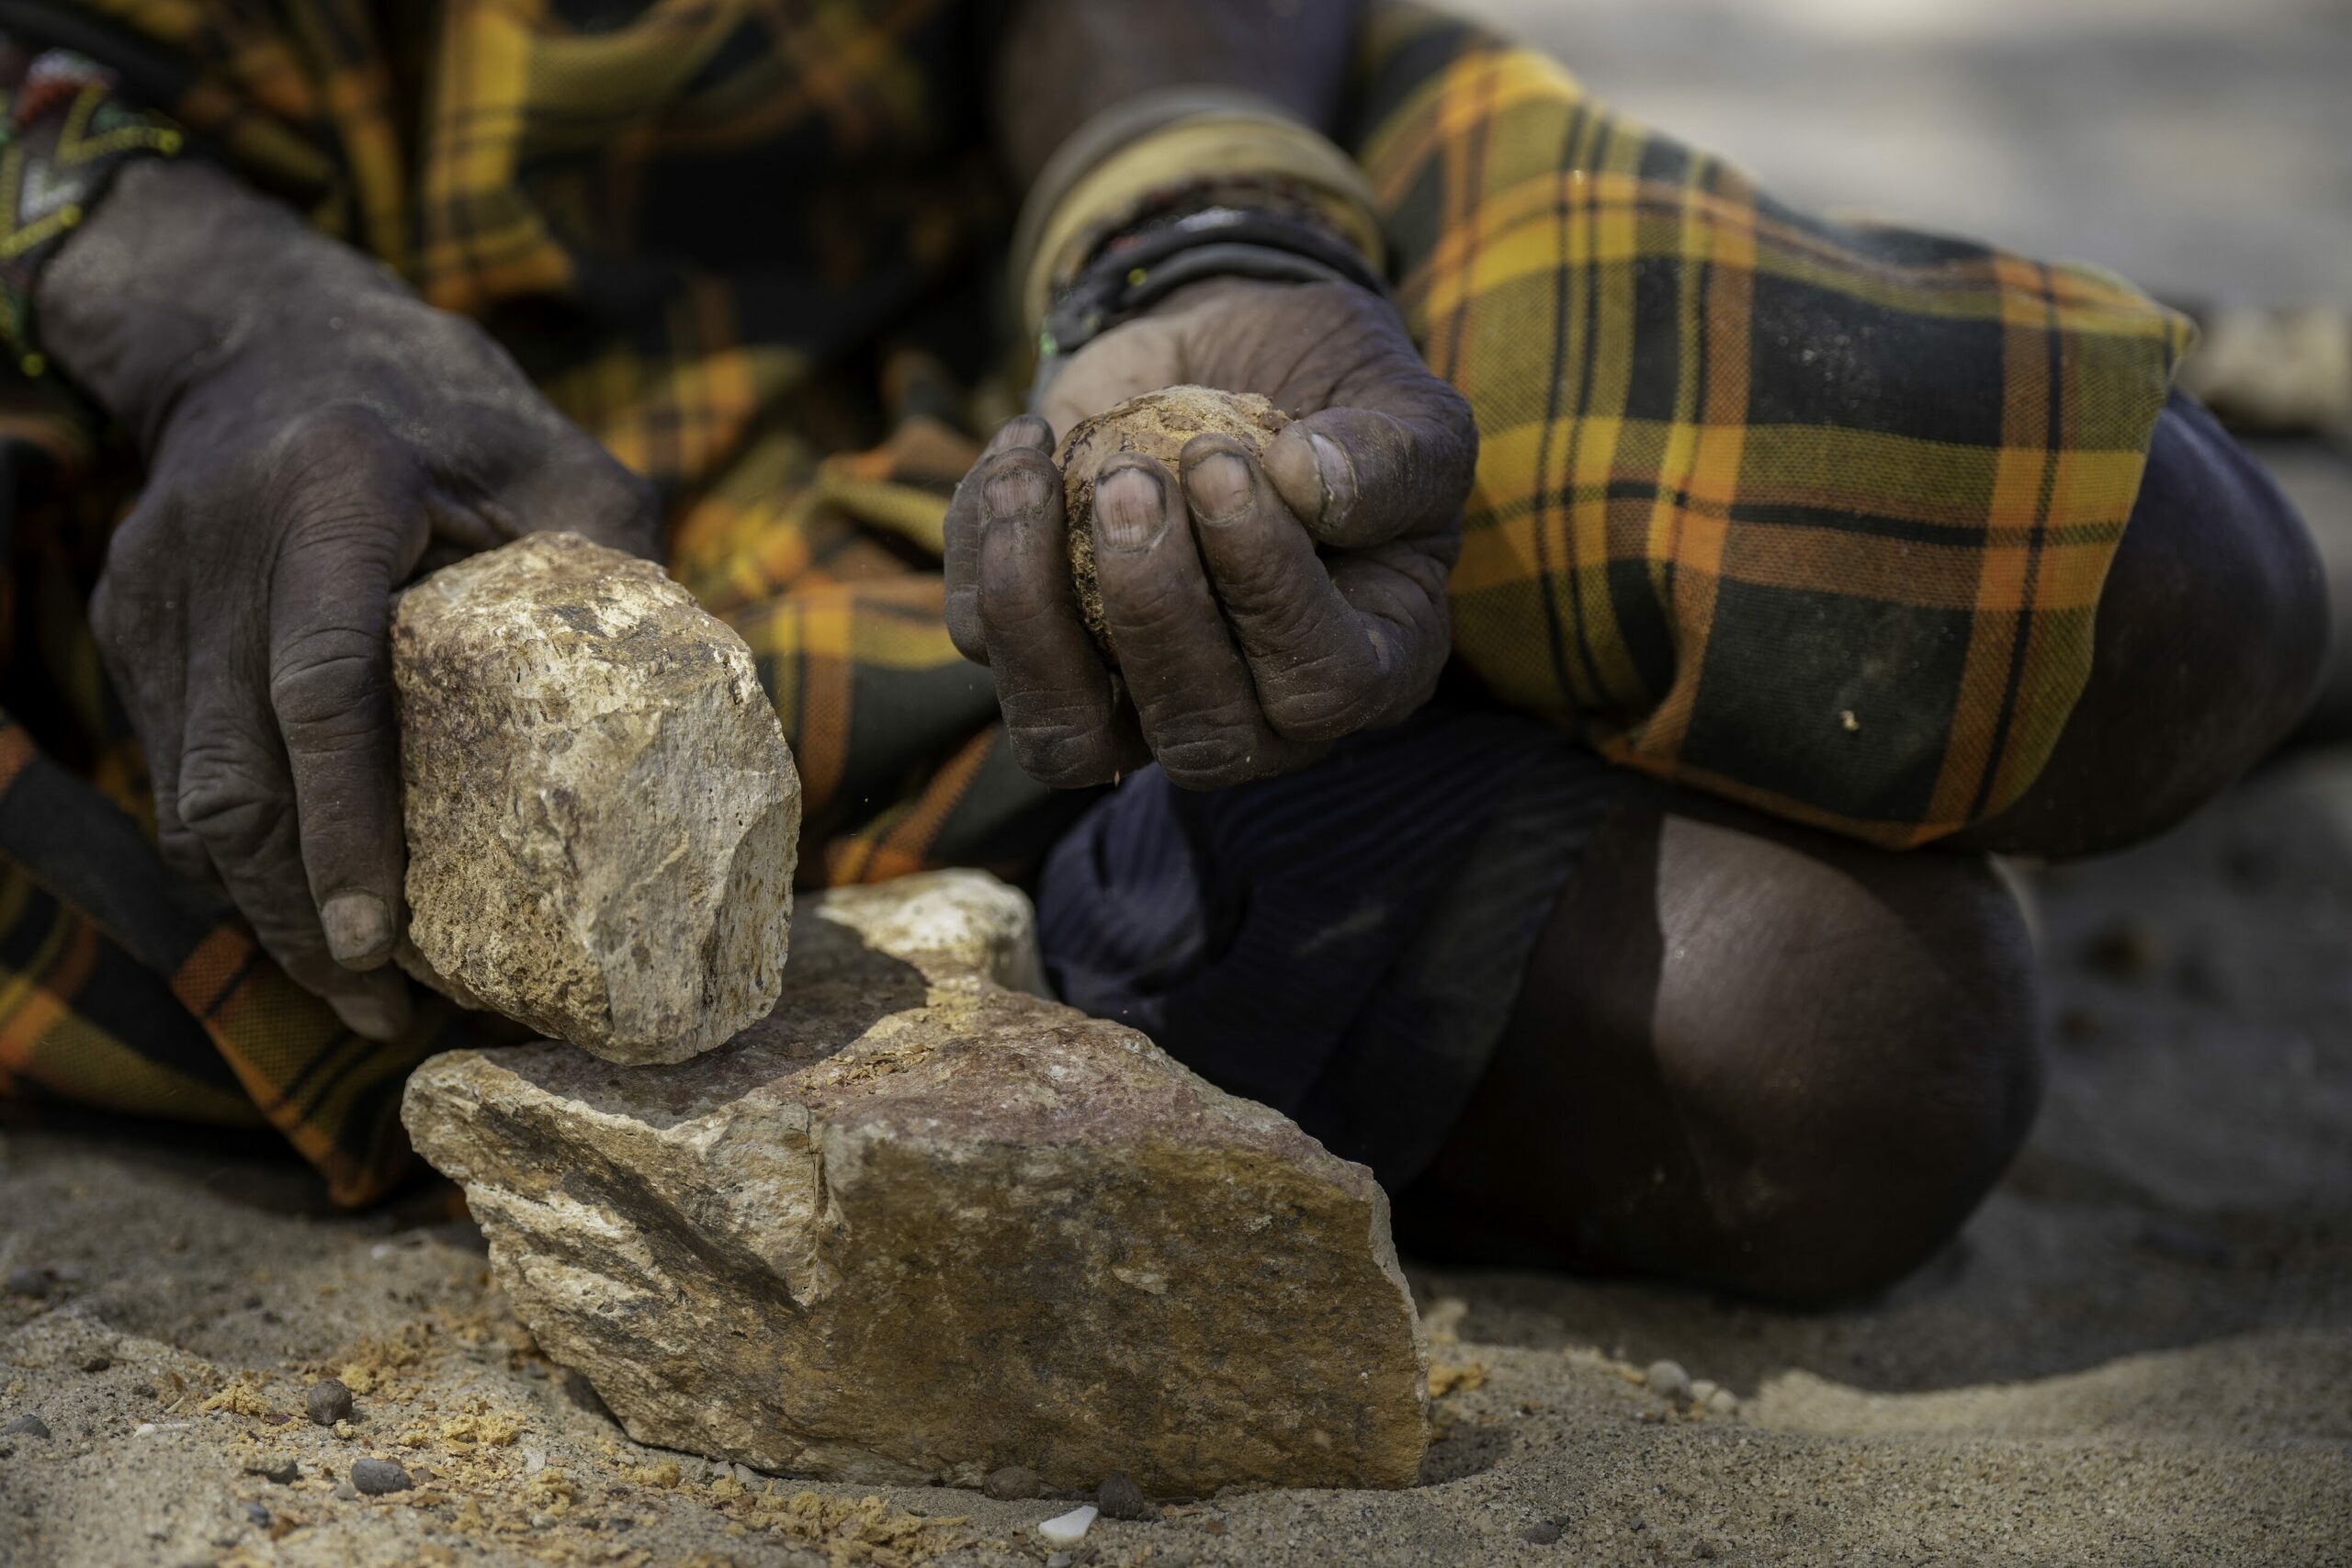 Women use rocks to pound doum palms for a midday snack in Kangichok, Turkana County, Kenya. Credit: Larry Price